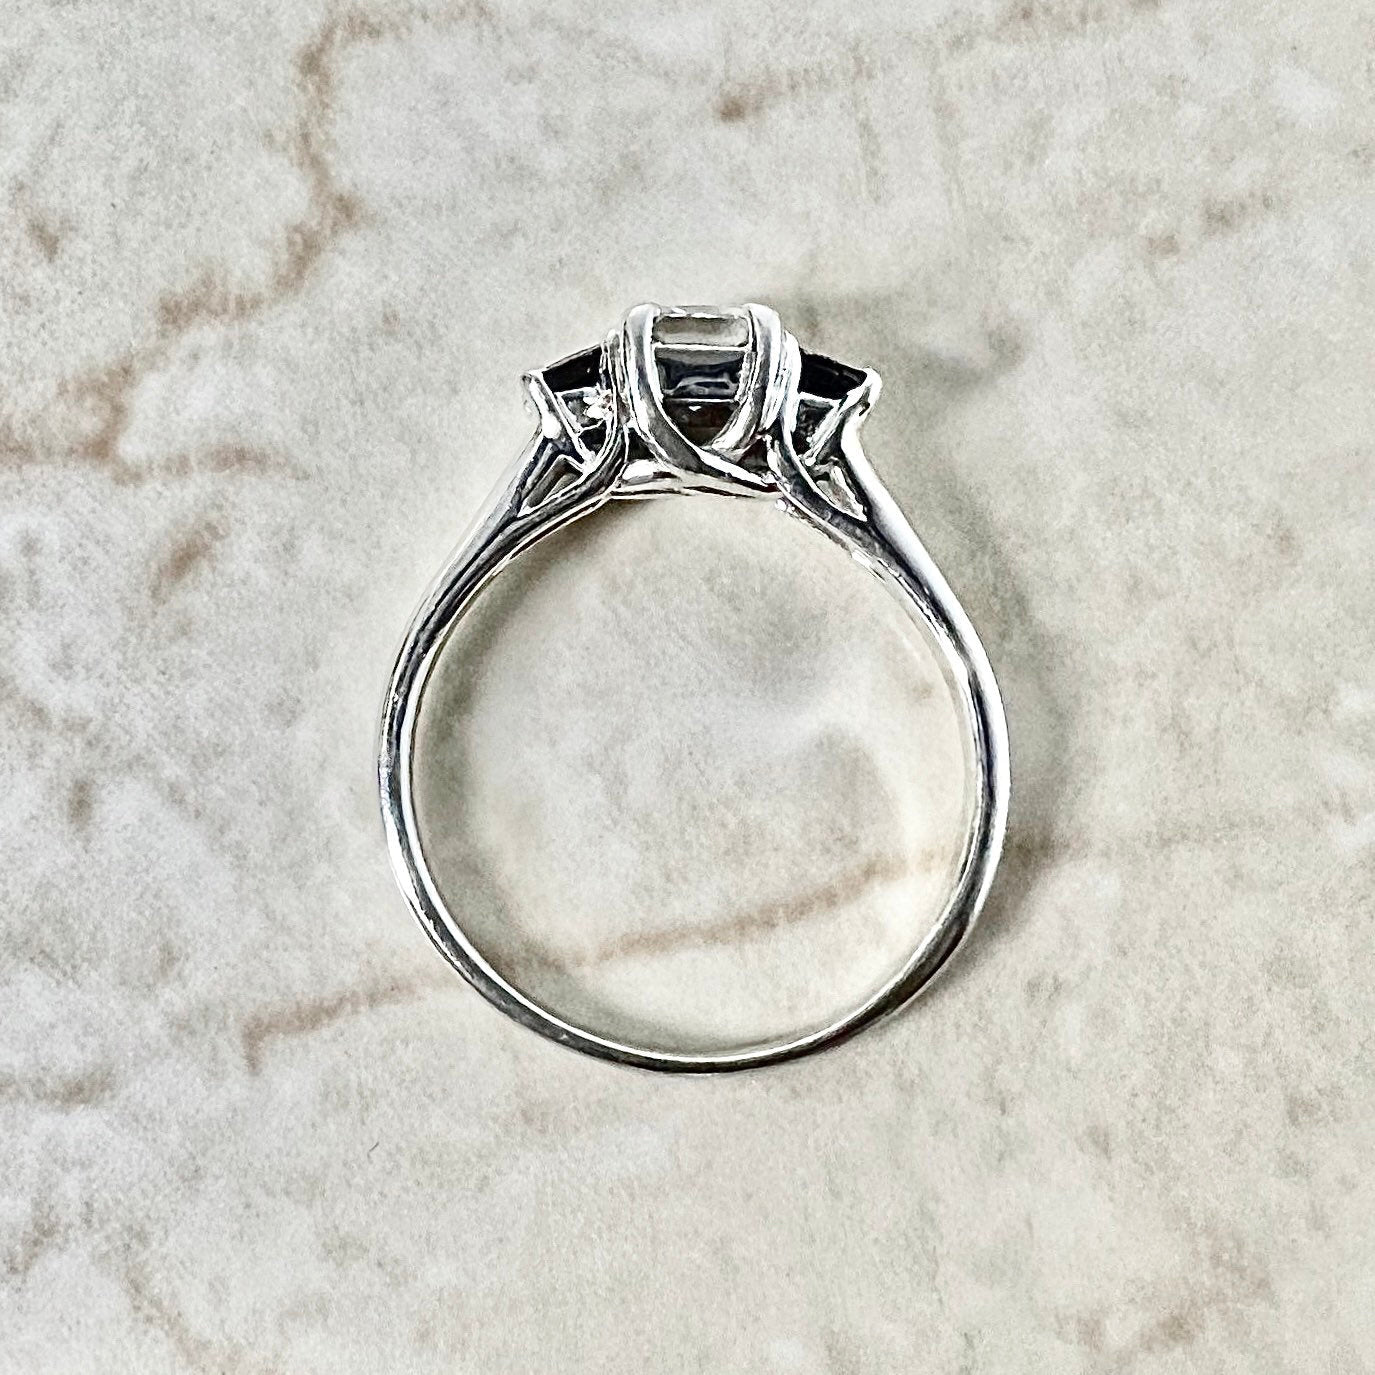 14K Princess Cut Diamond And Sapphire Engagement Ring - 14K White Gold Ring - Three Stone Ring - Vintage Diamond Ring - Anniversary Ring